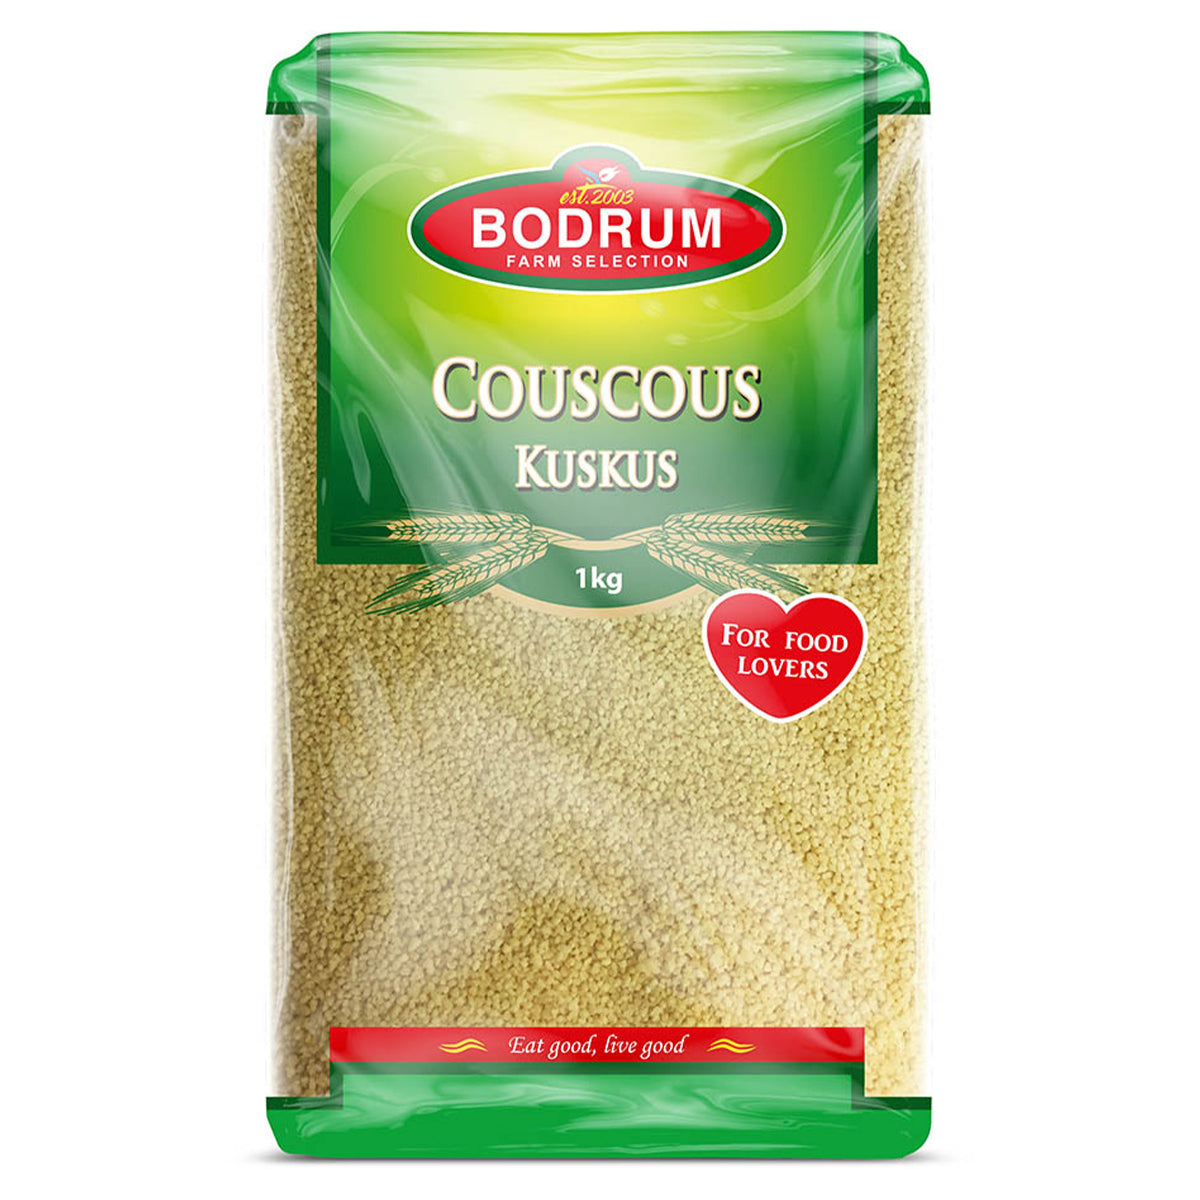 Bodrum - Cous Cous - 1kg - Continental Food Store